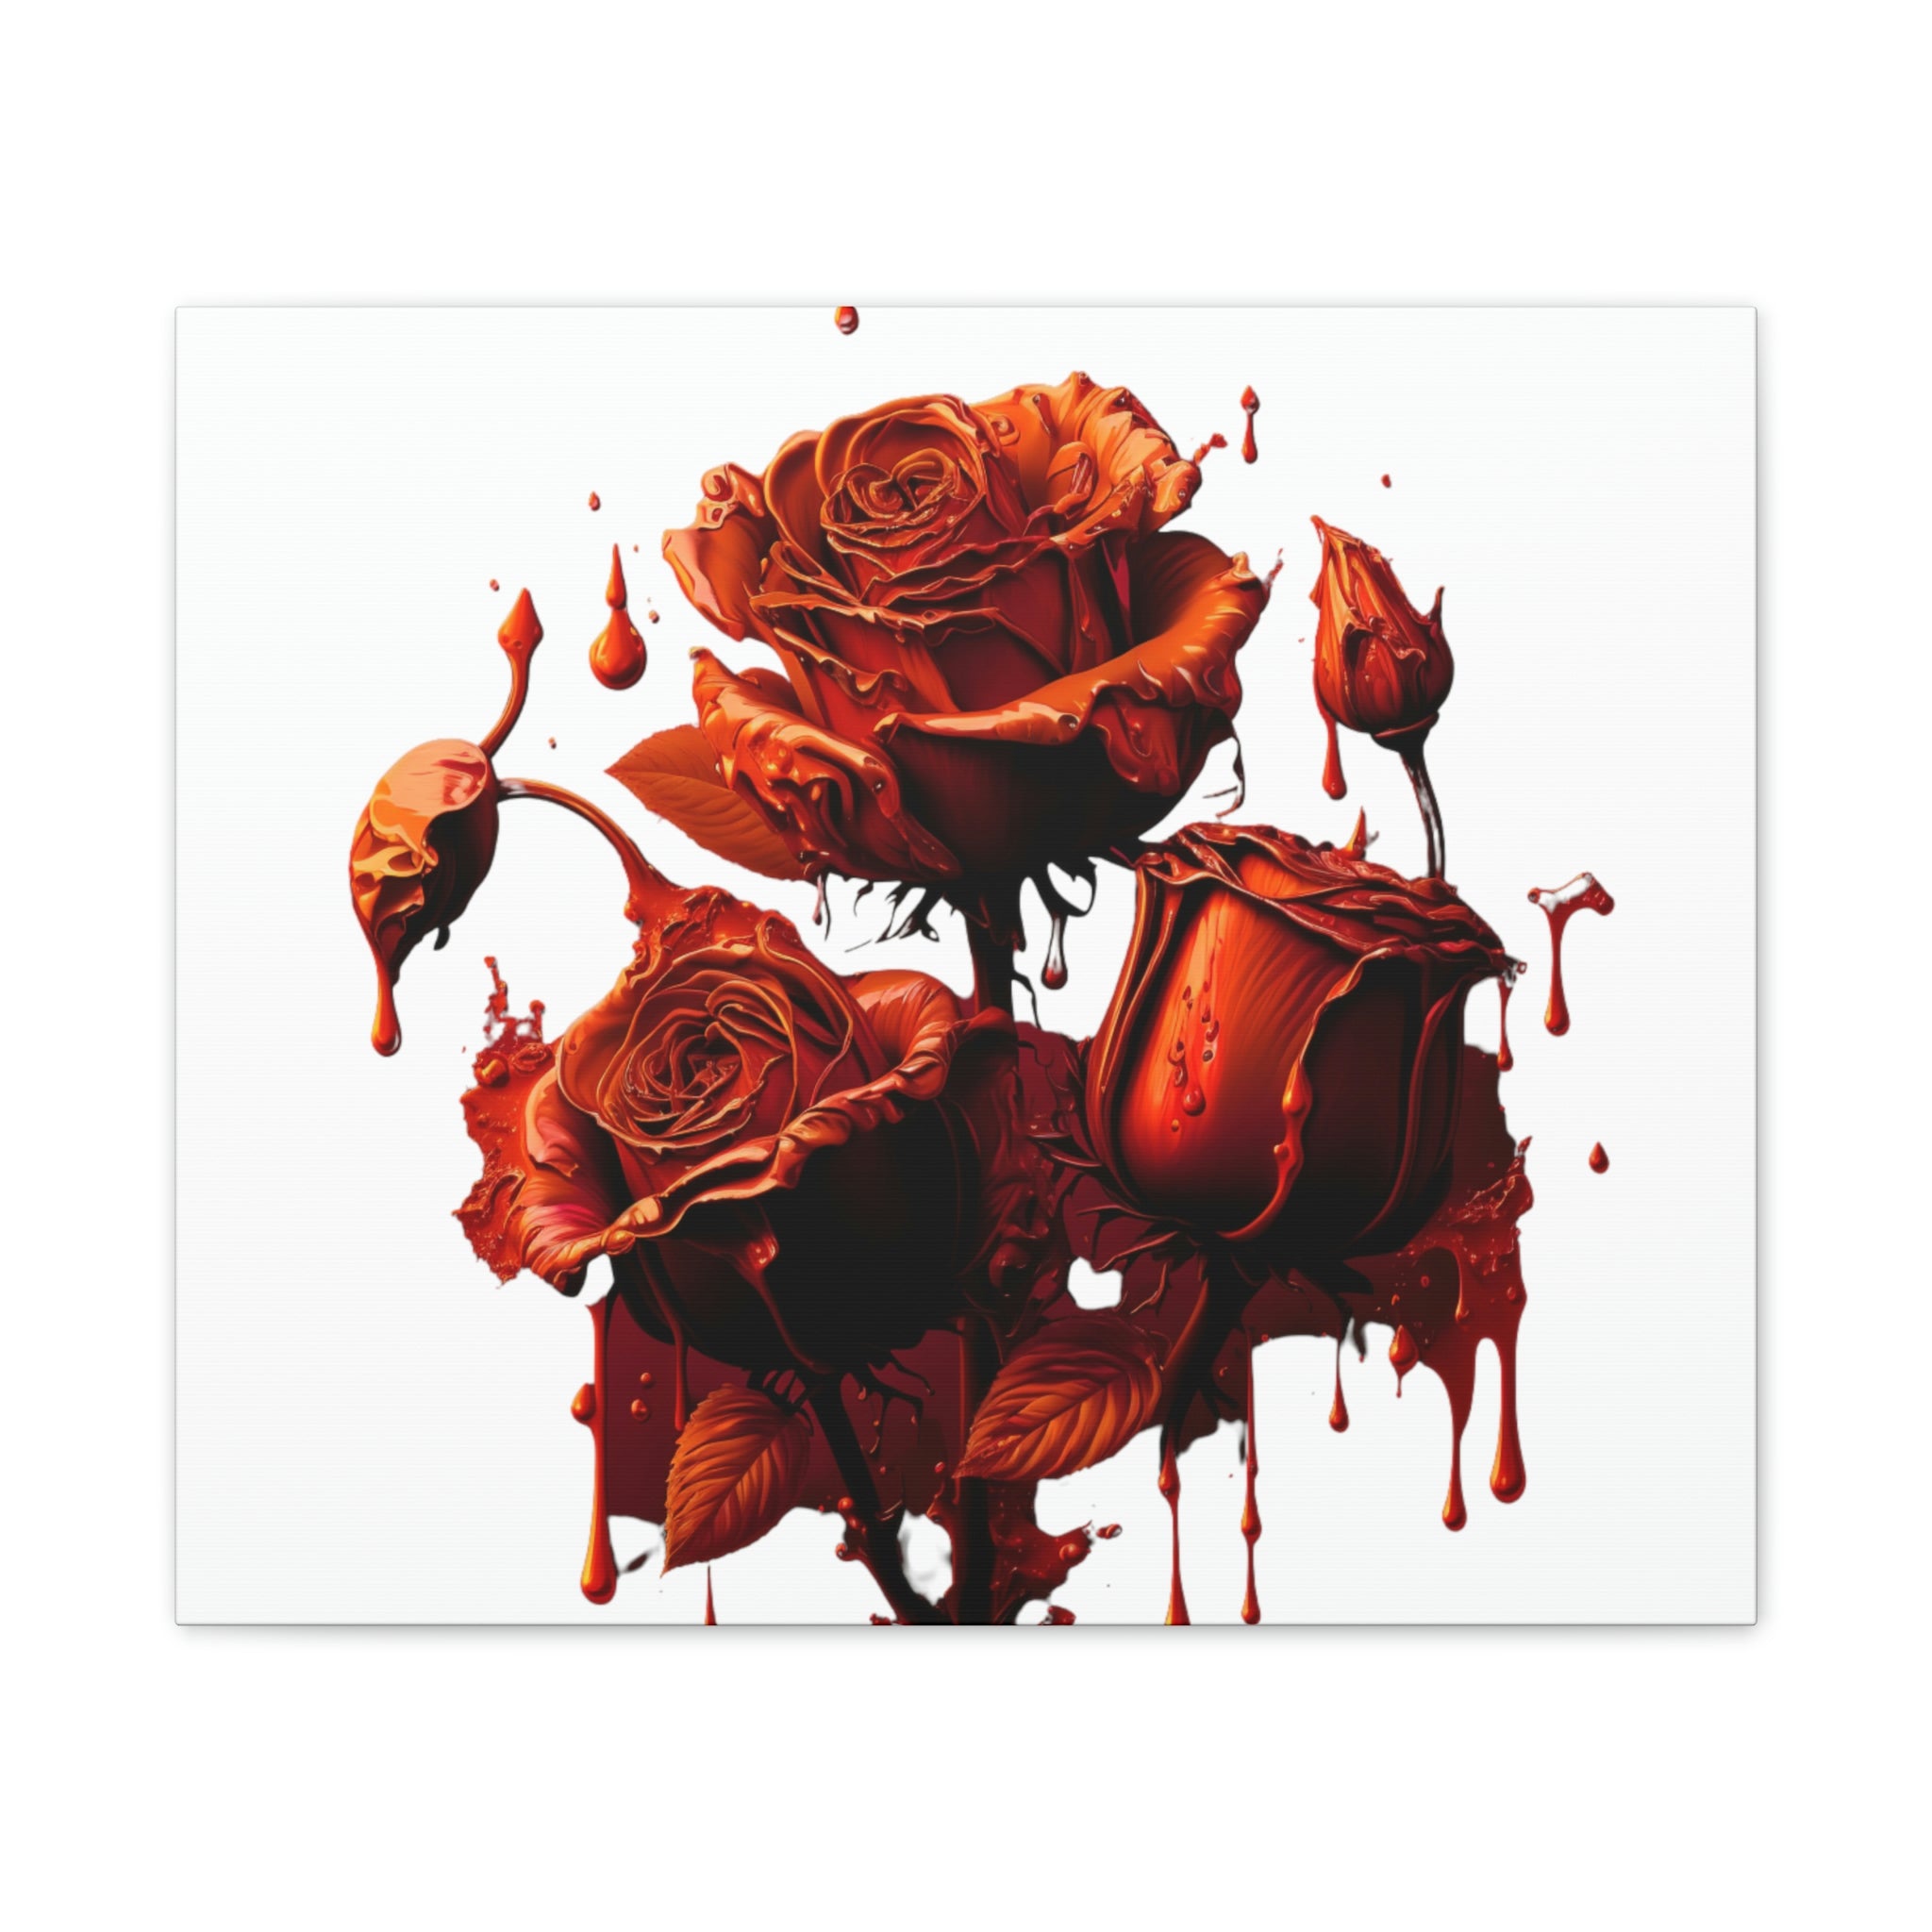 Scarlet Splendor: A Canvas of Large Red Roses